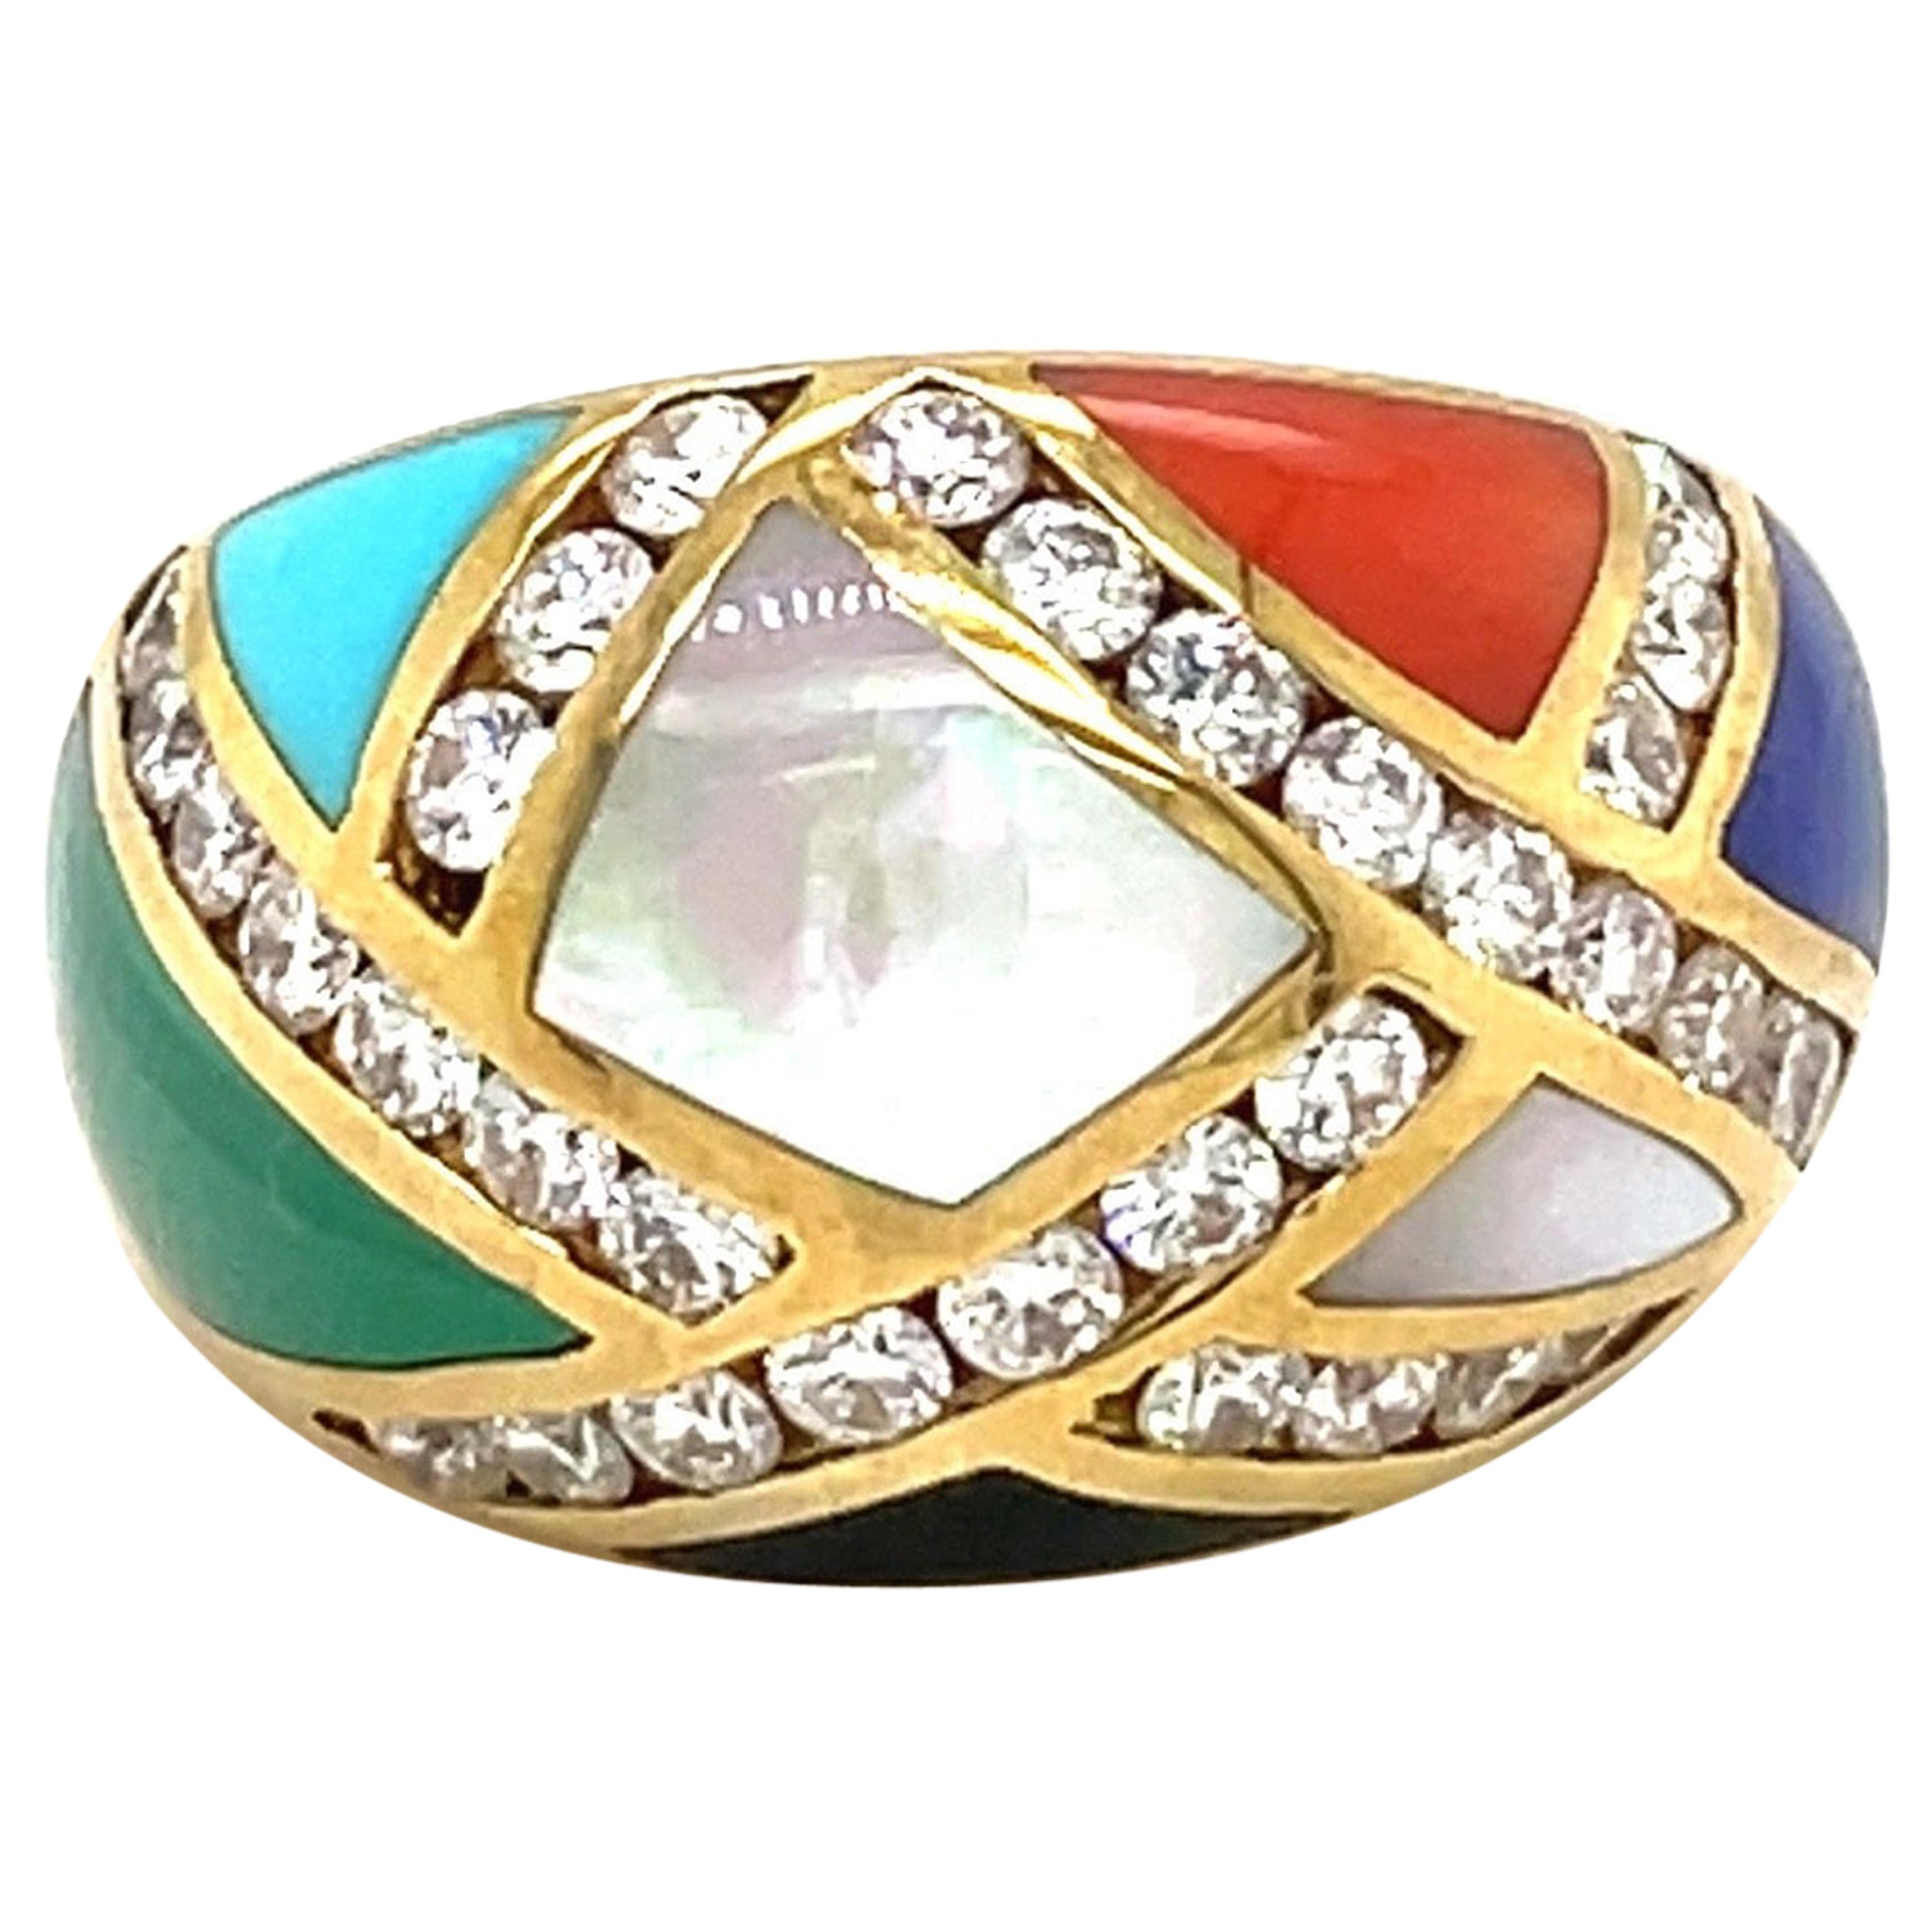 Asch Grossbardt 18KT YG Diamond 1.00Ct. & Inlaid  Semi Precious Stones Dome Ring